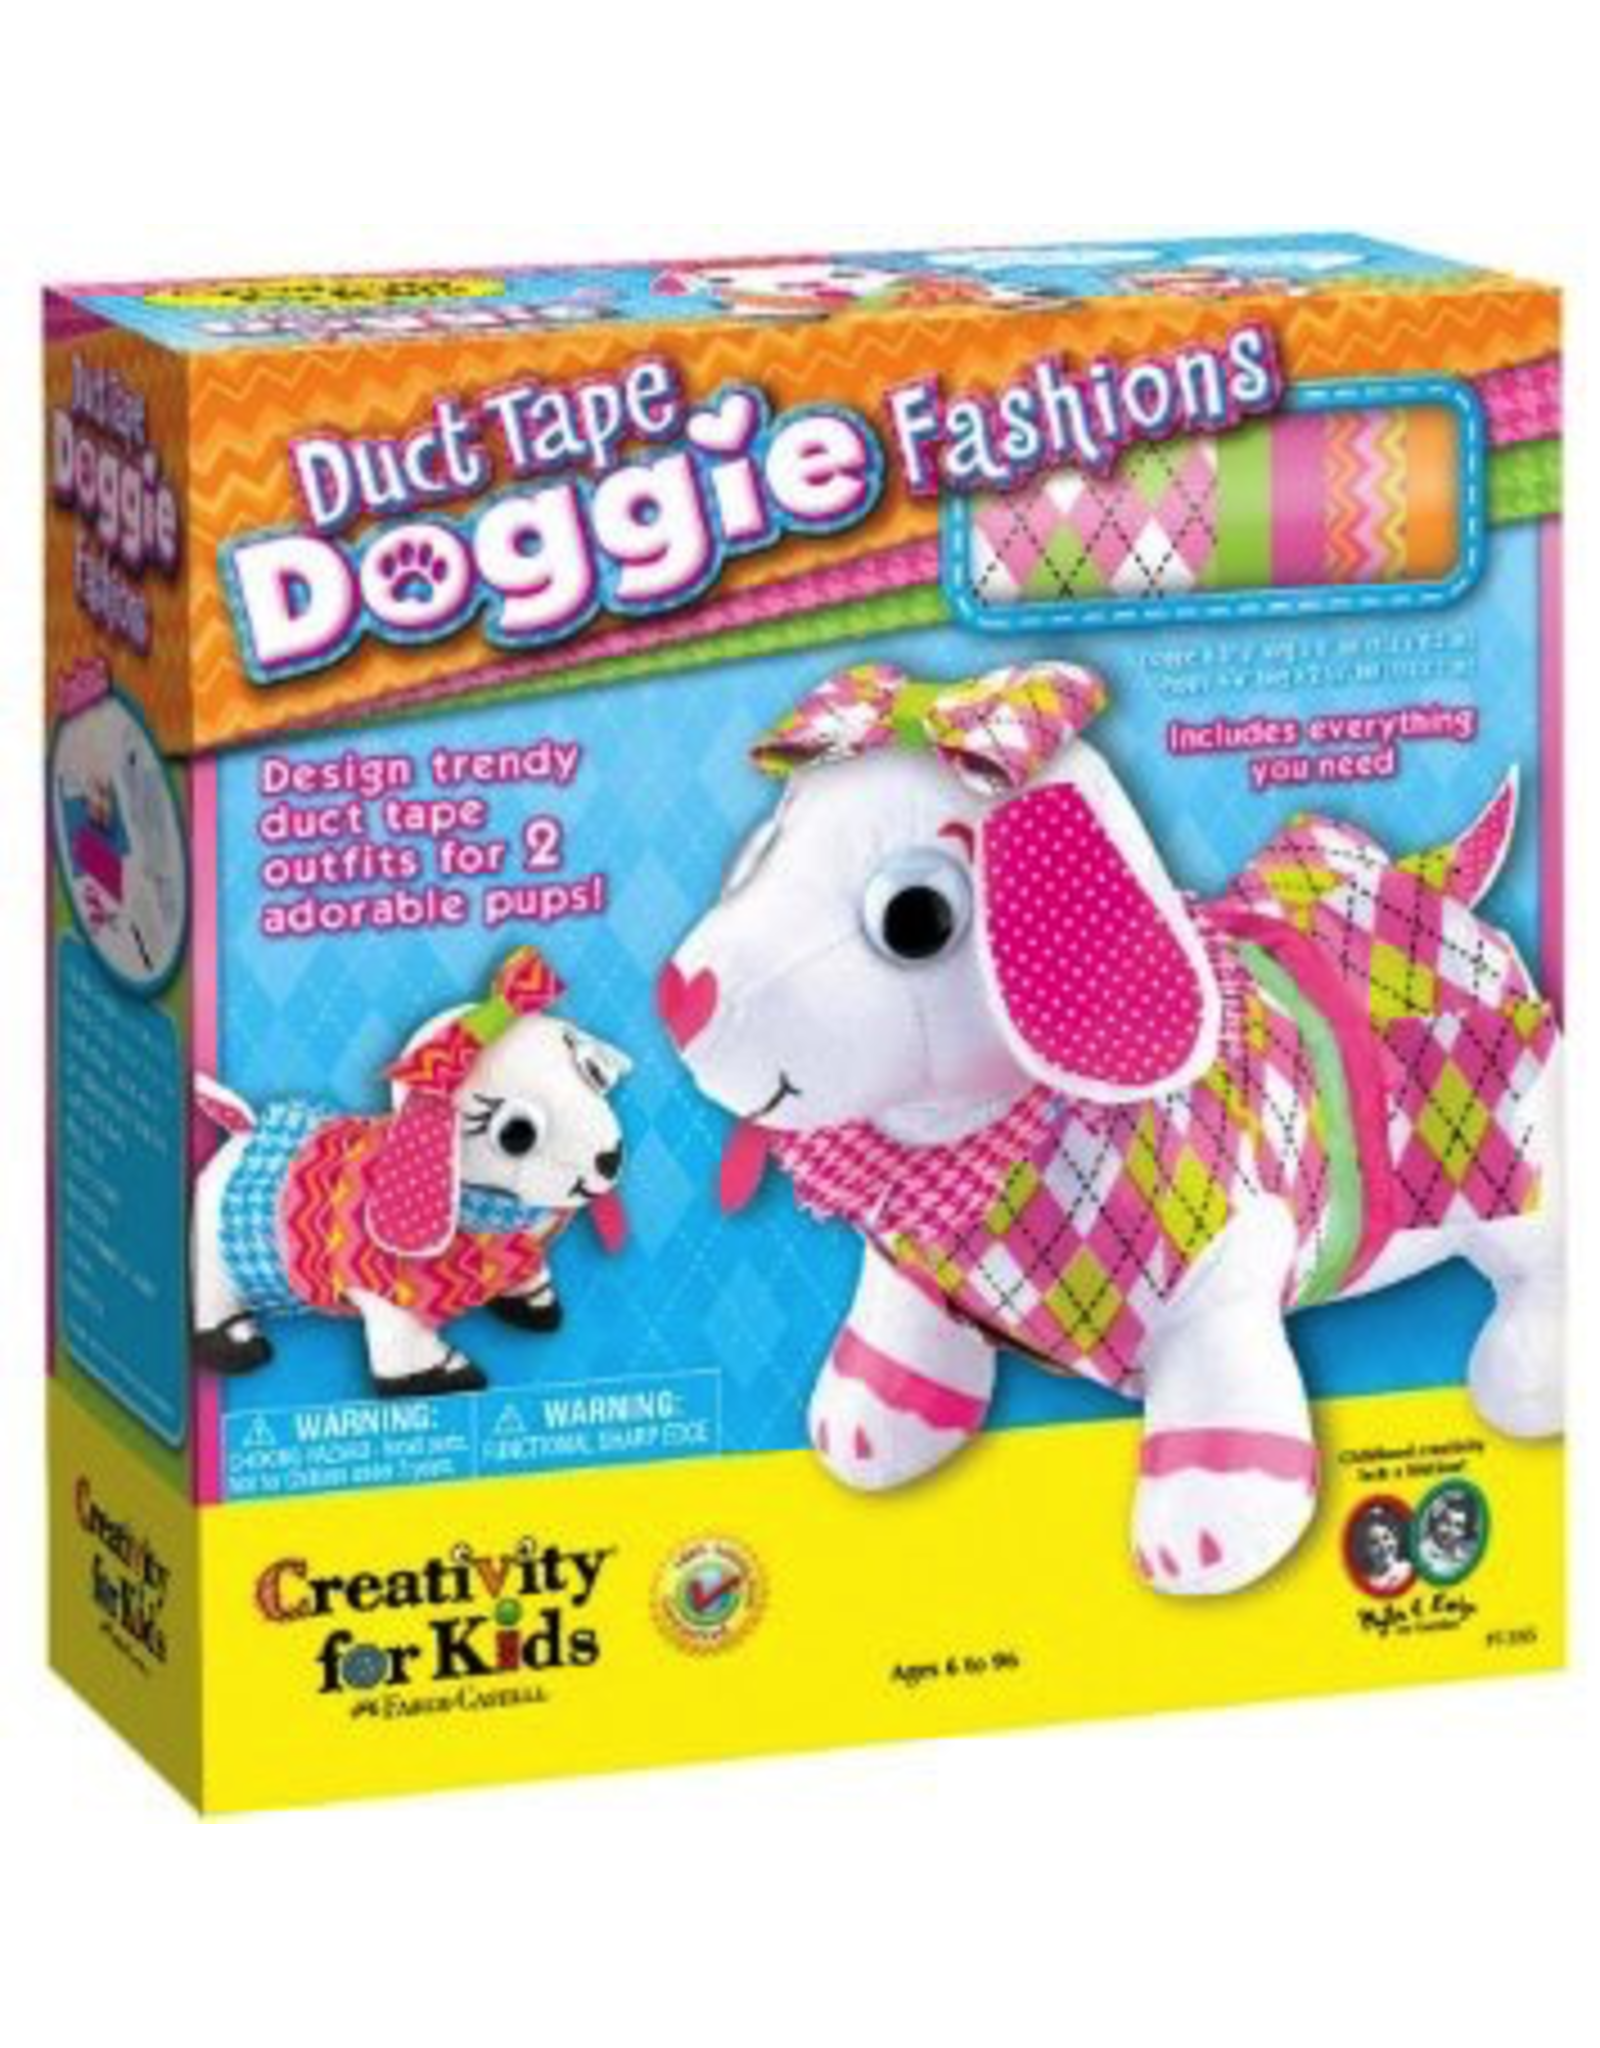 Creativity for Kids Duct Tape Doggie Fashion